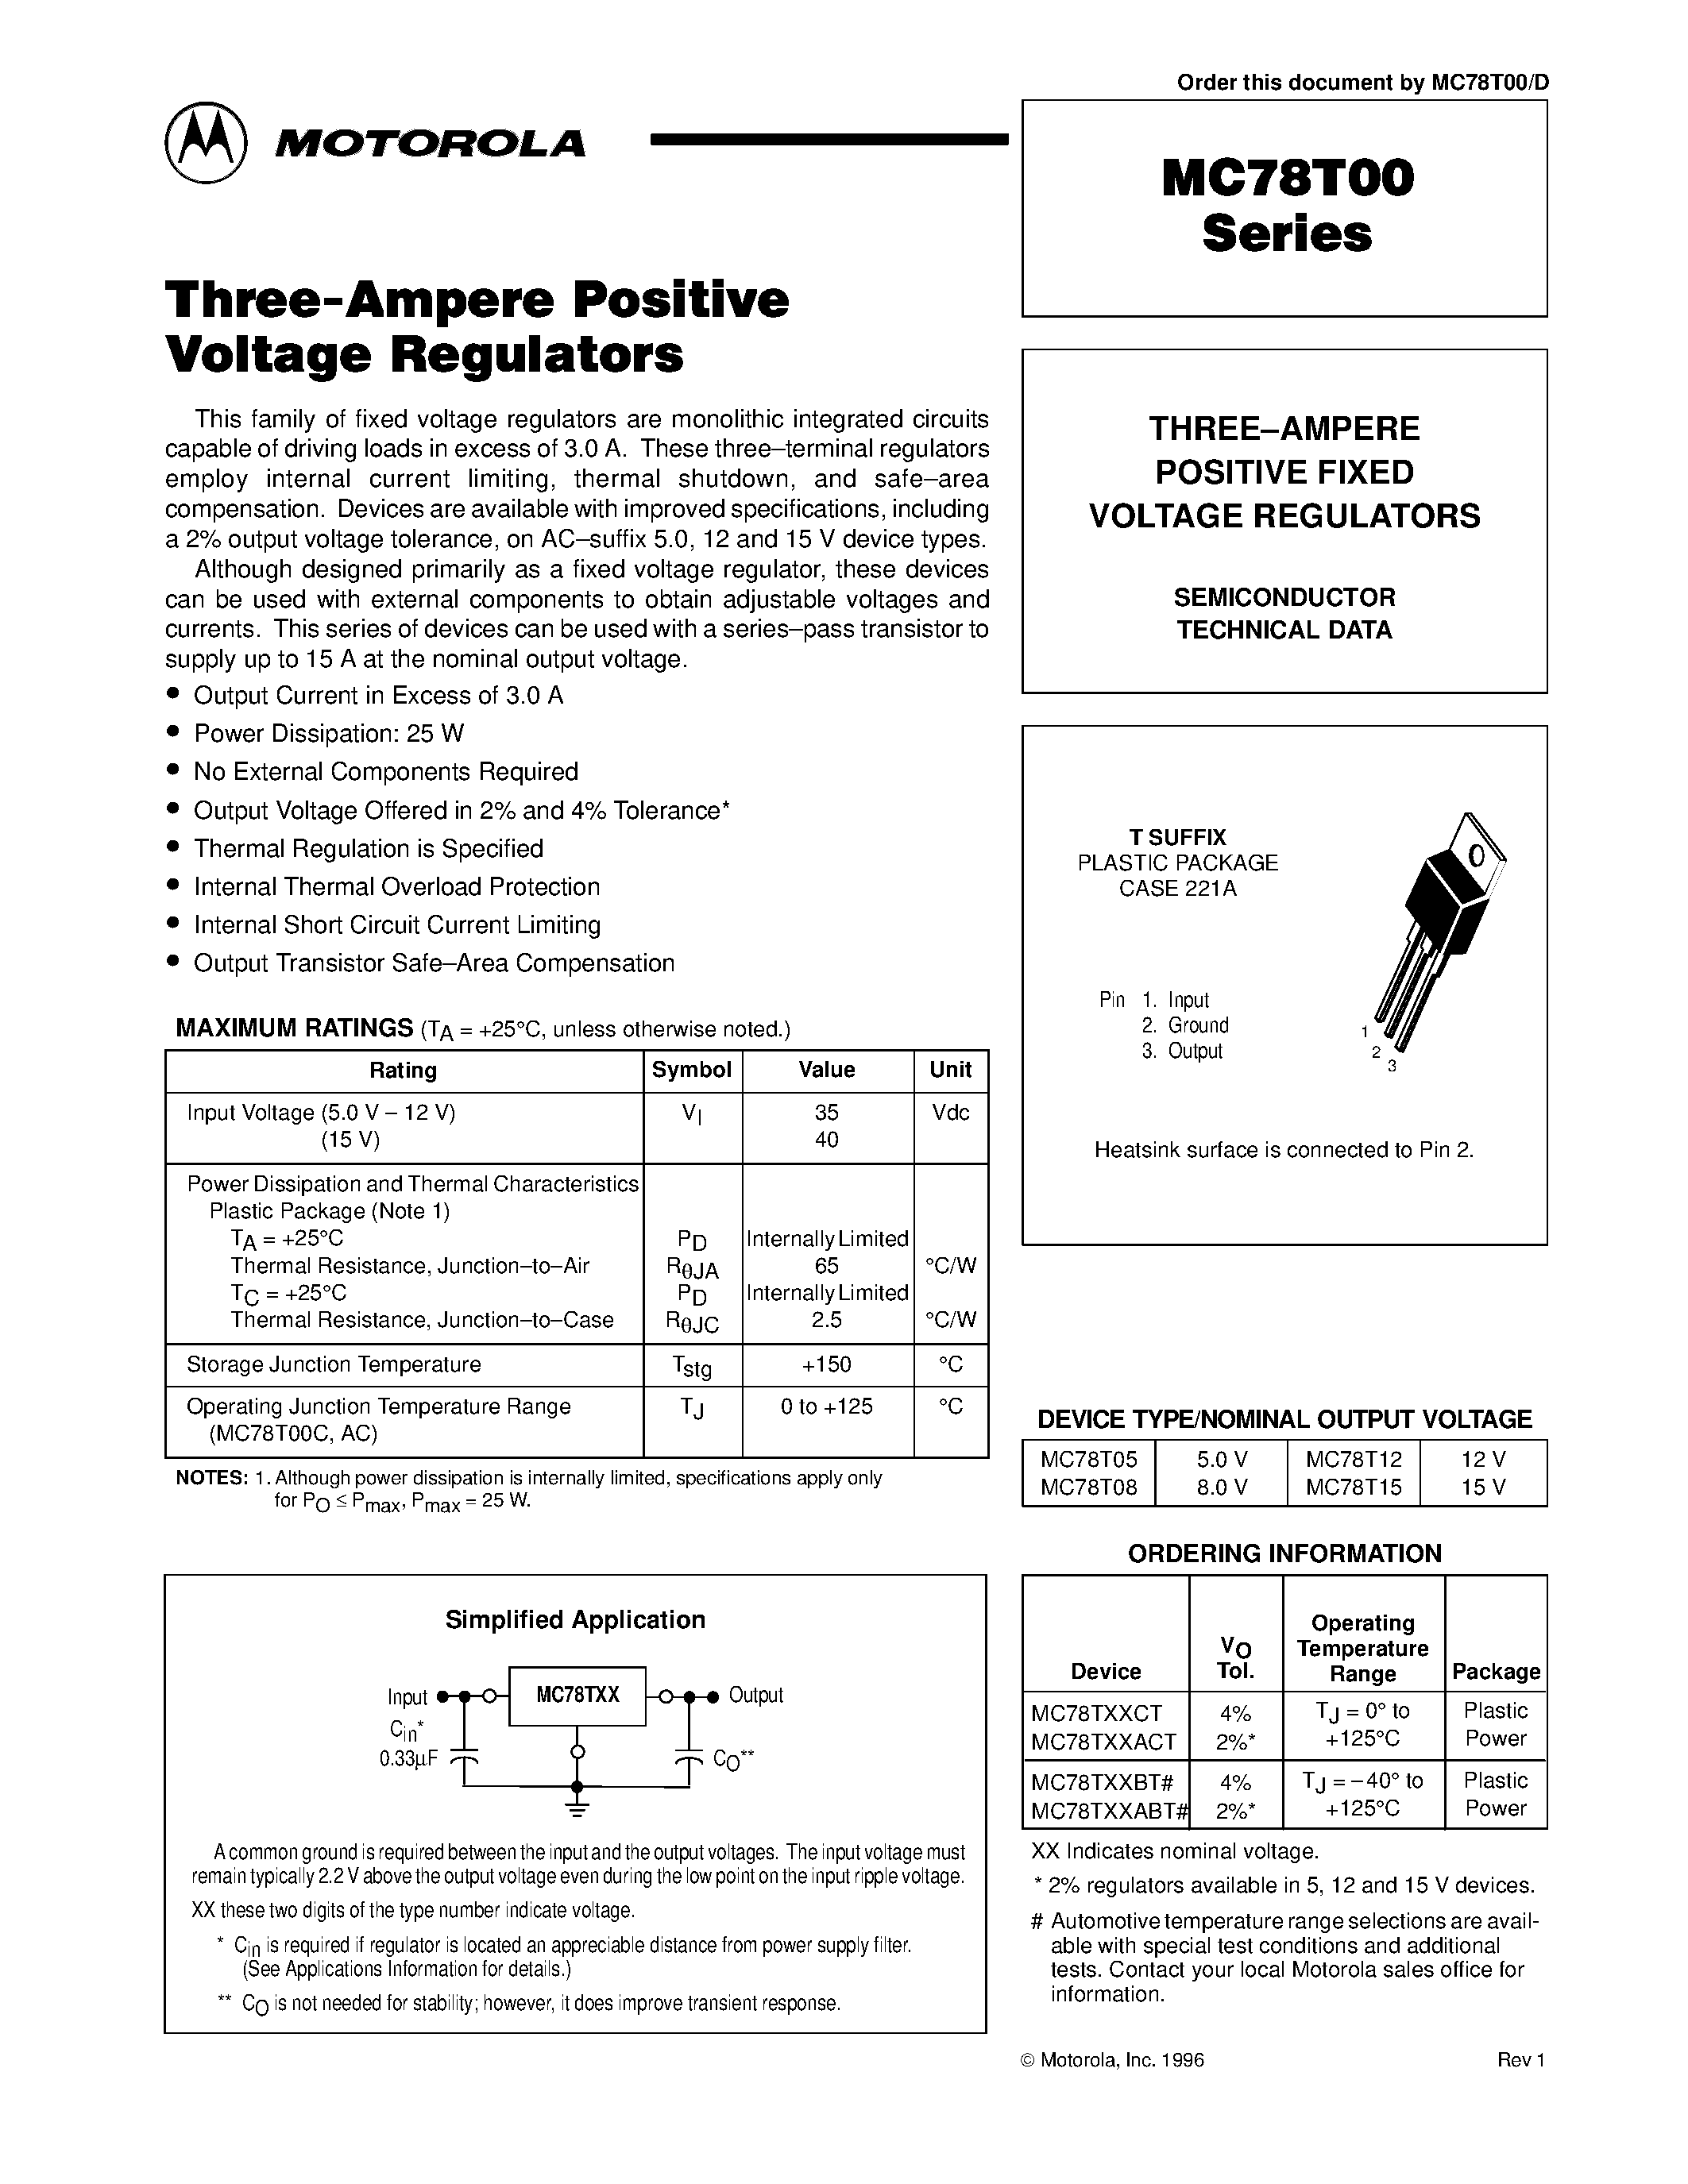 Datasheet MC78T05CD2TR4 - THREE-AMPERE POSITIVE FIXED VOLTAGE REGULATORS page 1